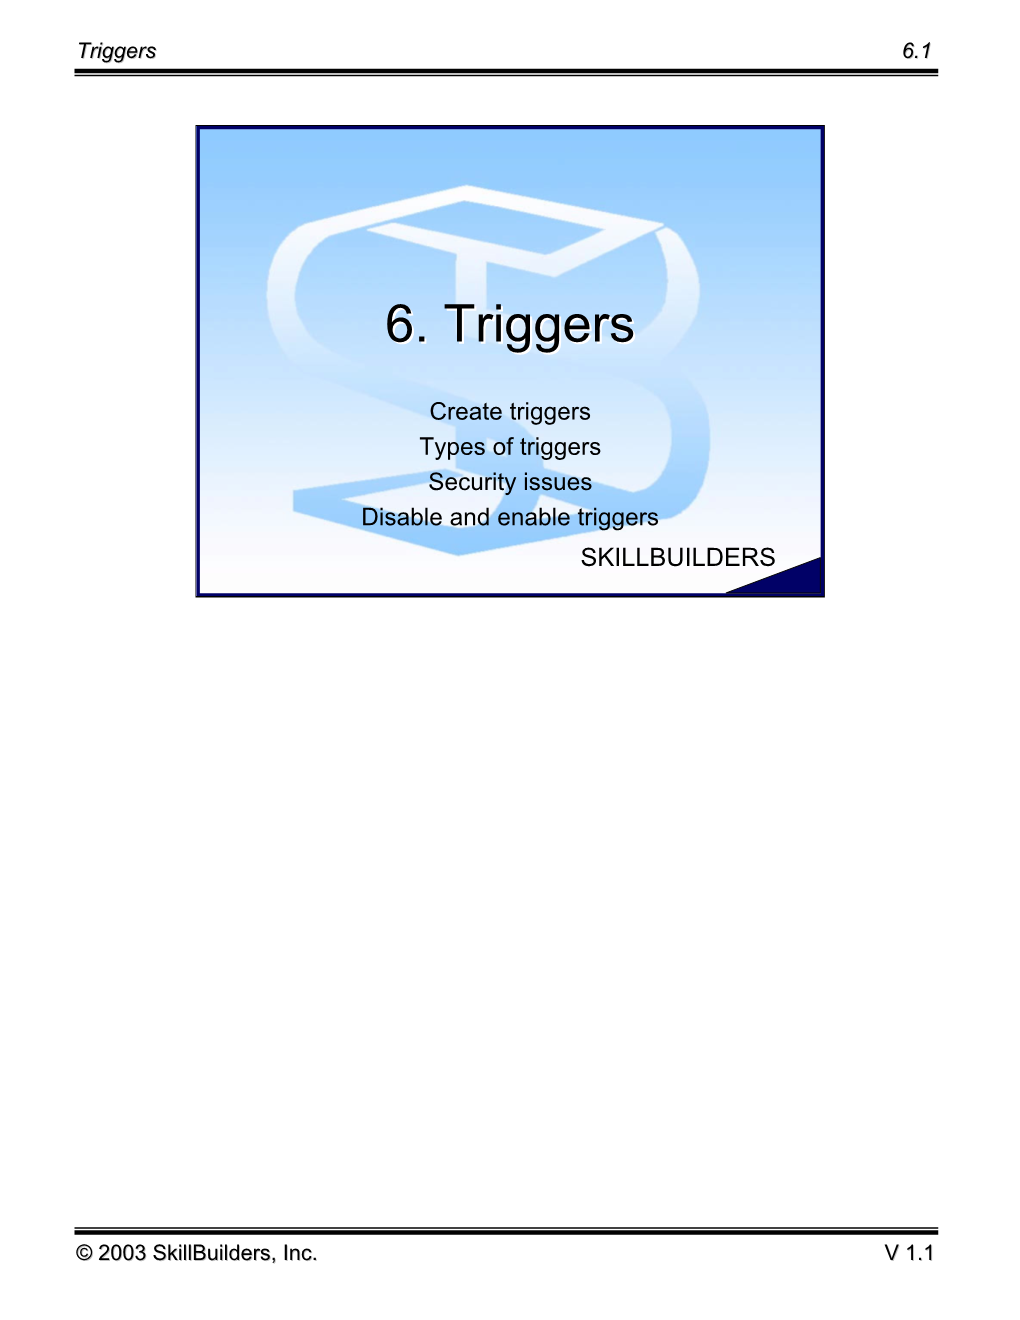 6. Triggerstriggers